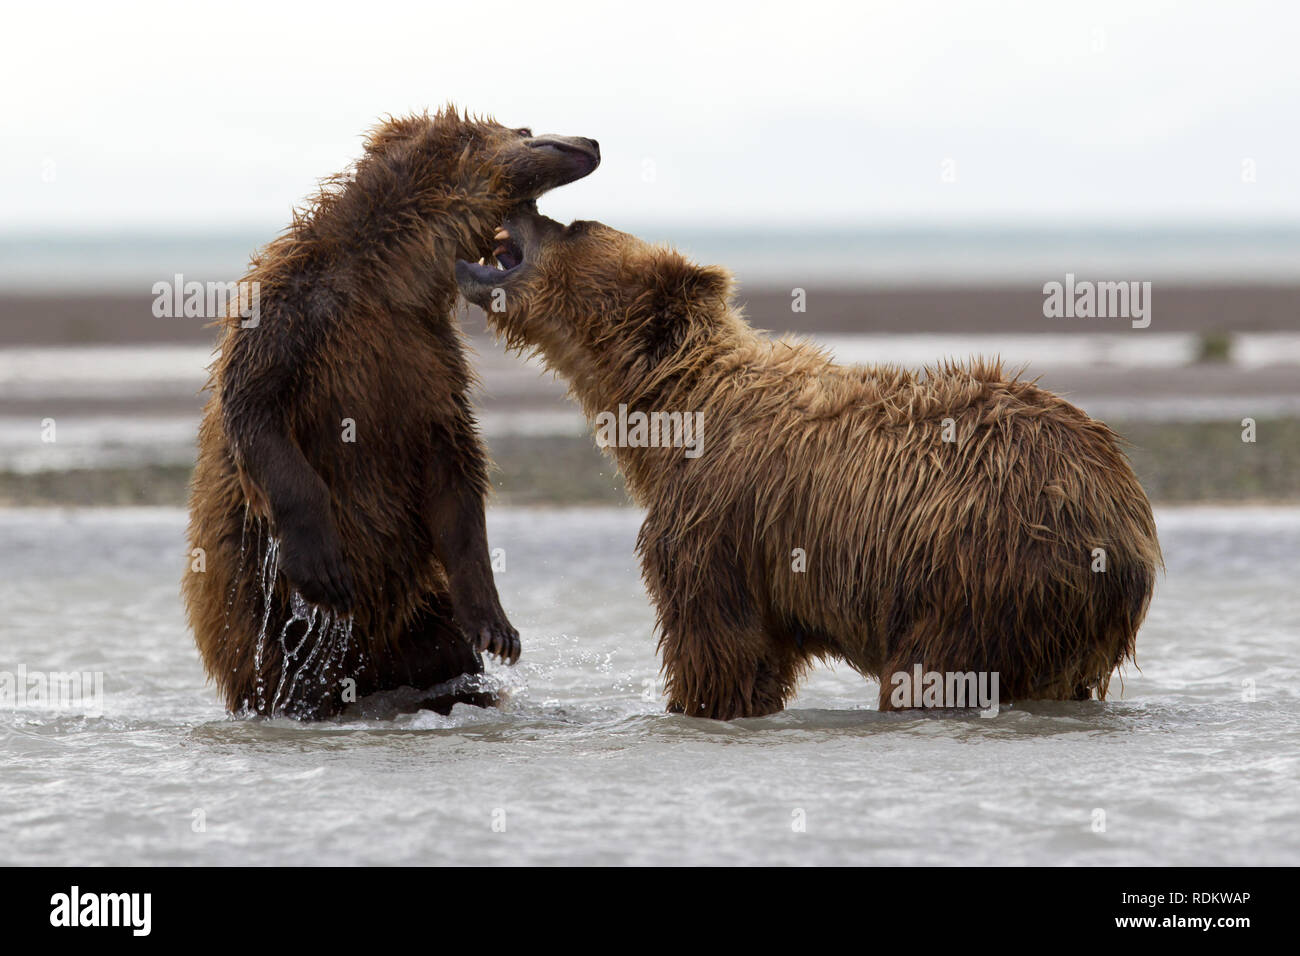 Brown bear, Ursus arctos, viewing is a popular activity at Hallo Bay, Katmai National Park, Alaska, as grizzlies congregate on the beach to fish. Stock Photo